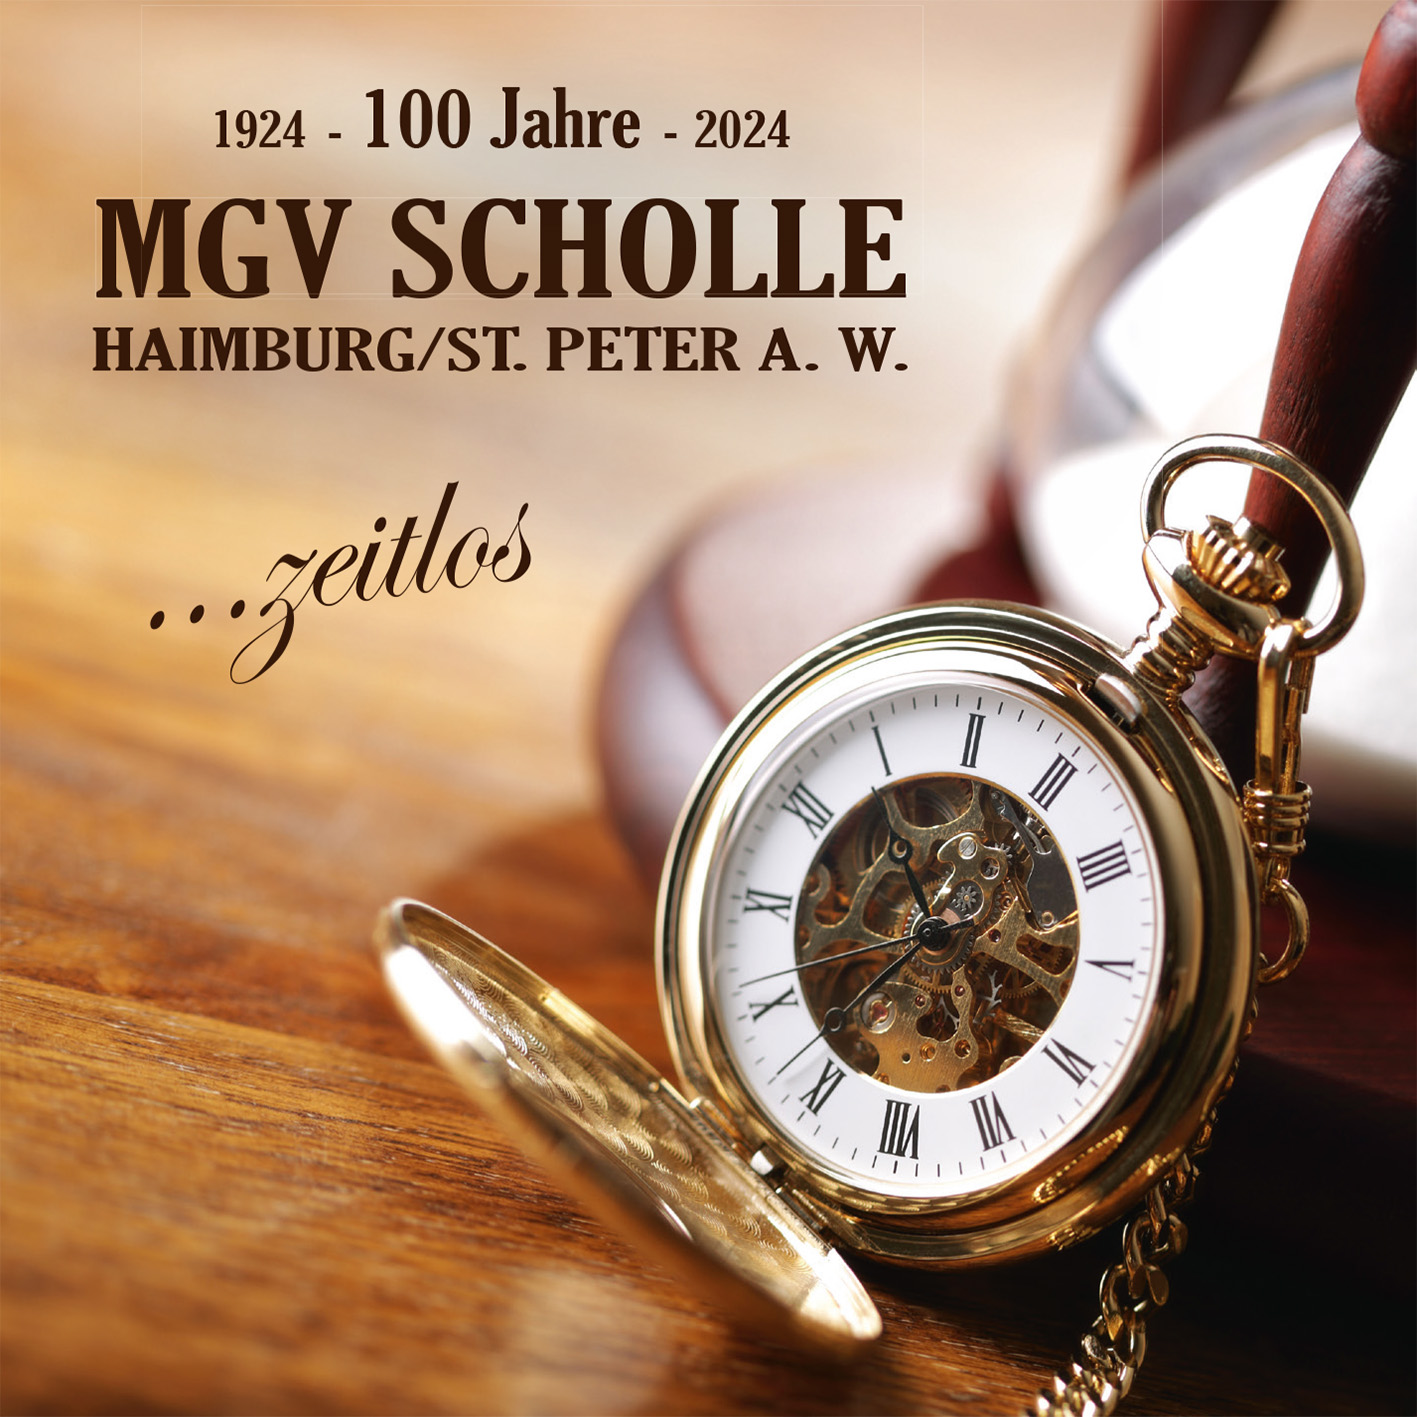 DRCD-2305 MGV Scholle "...zeitlos"